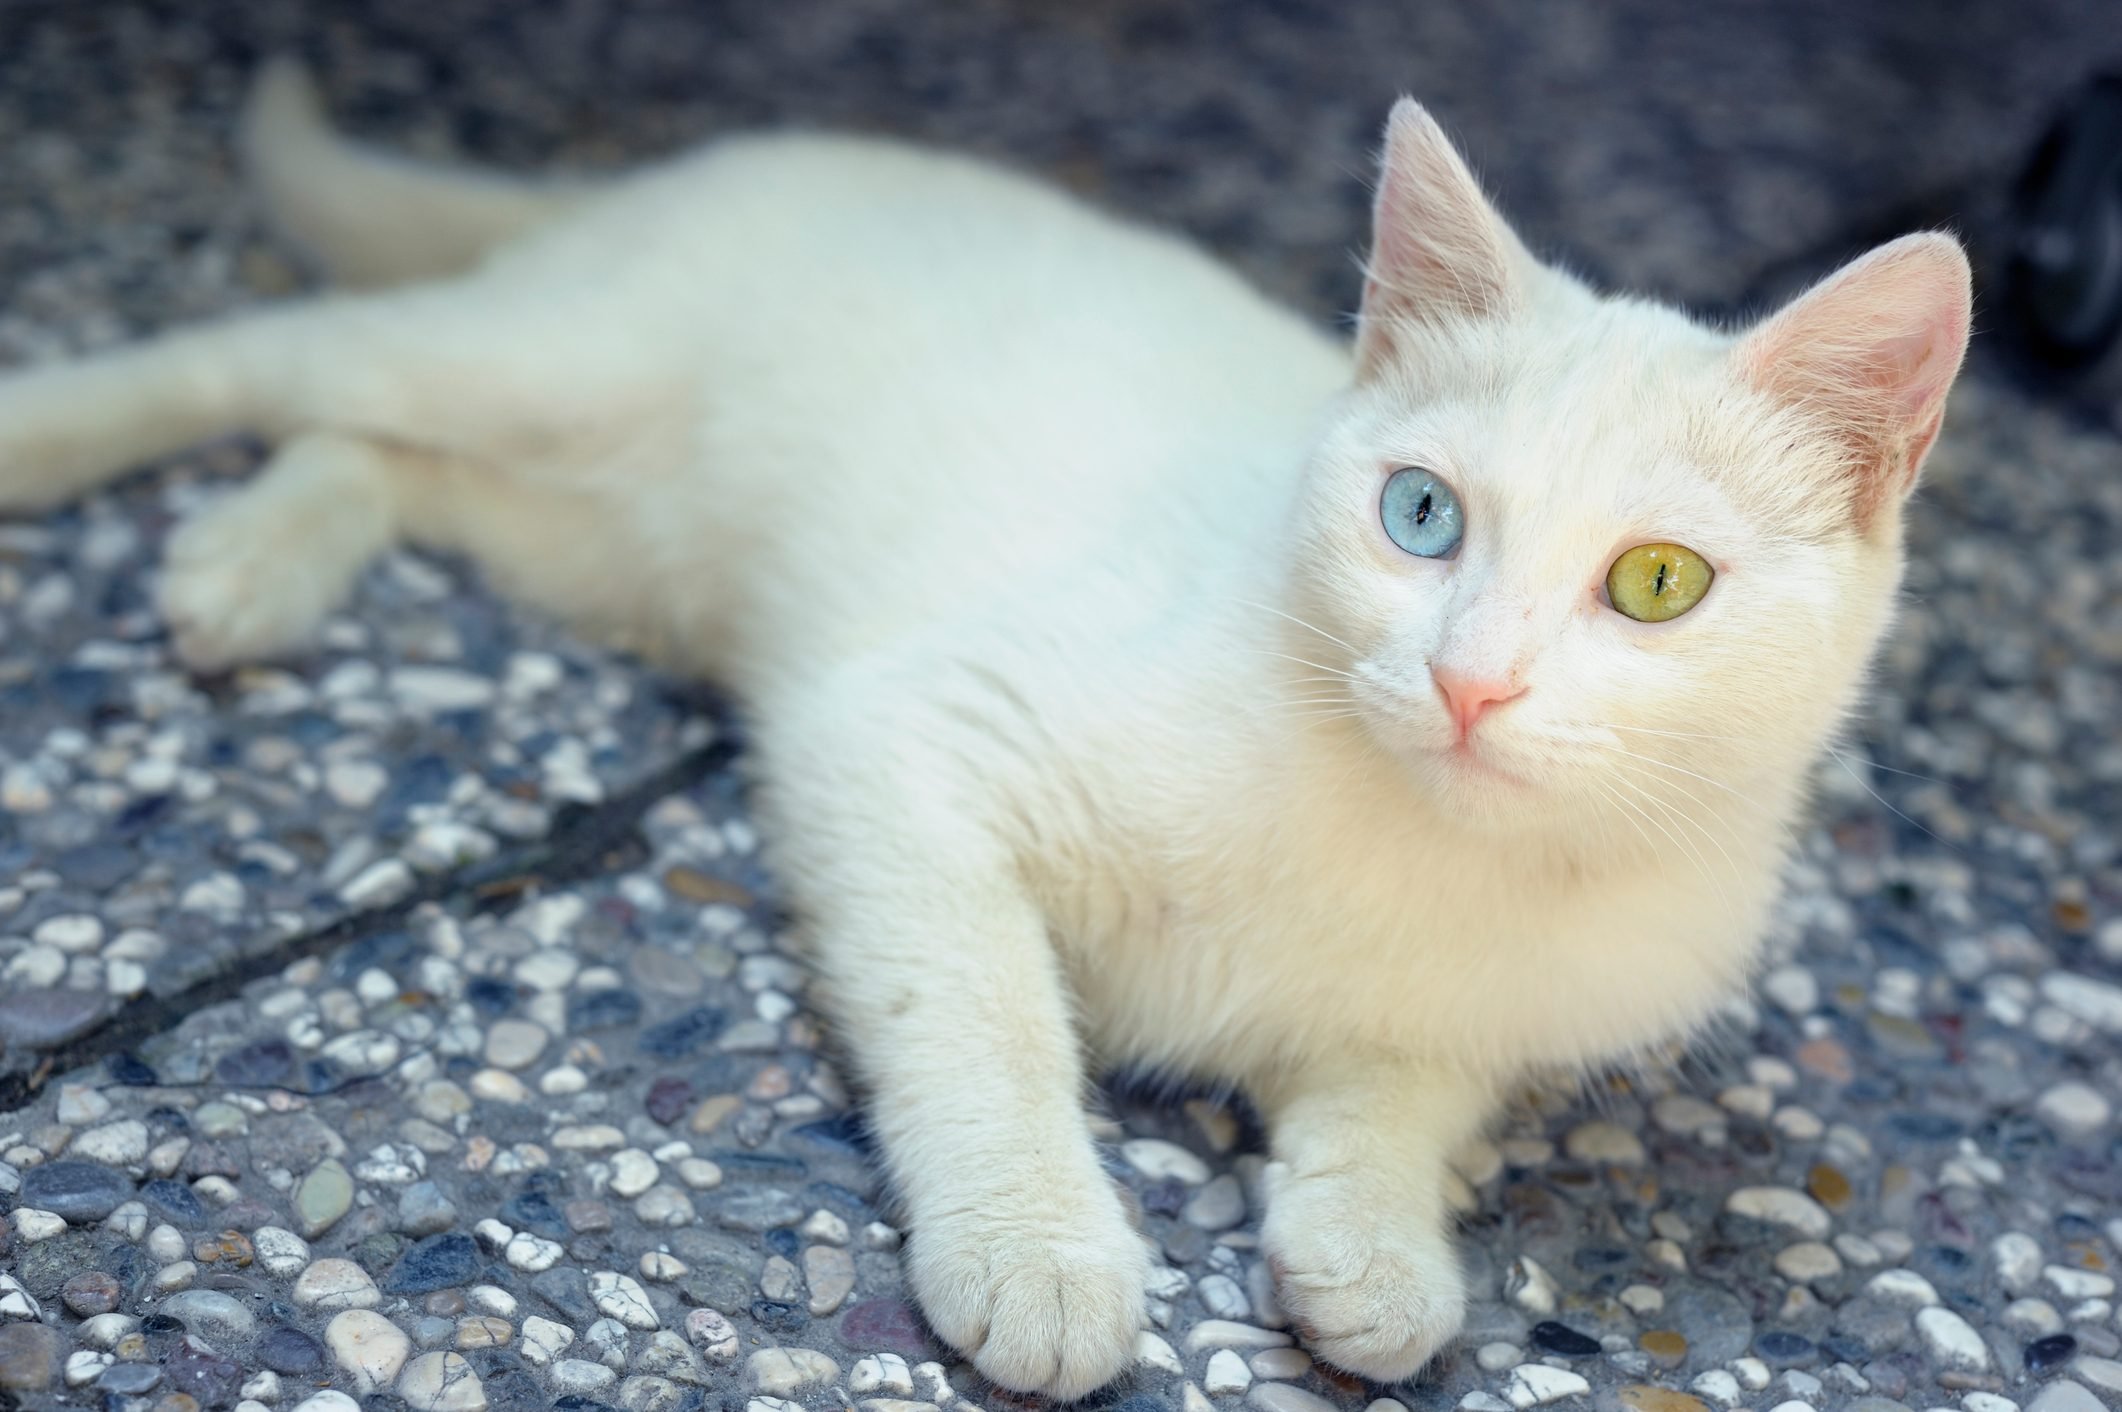 adopt a pet com blog 13 cutest cat breeds with pictures terbaru